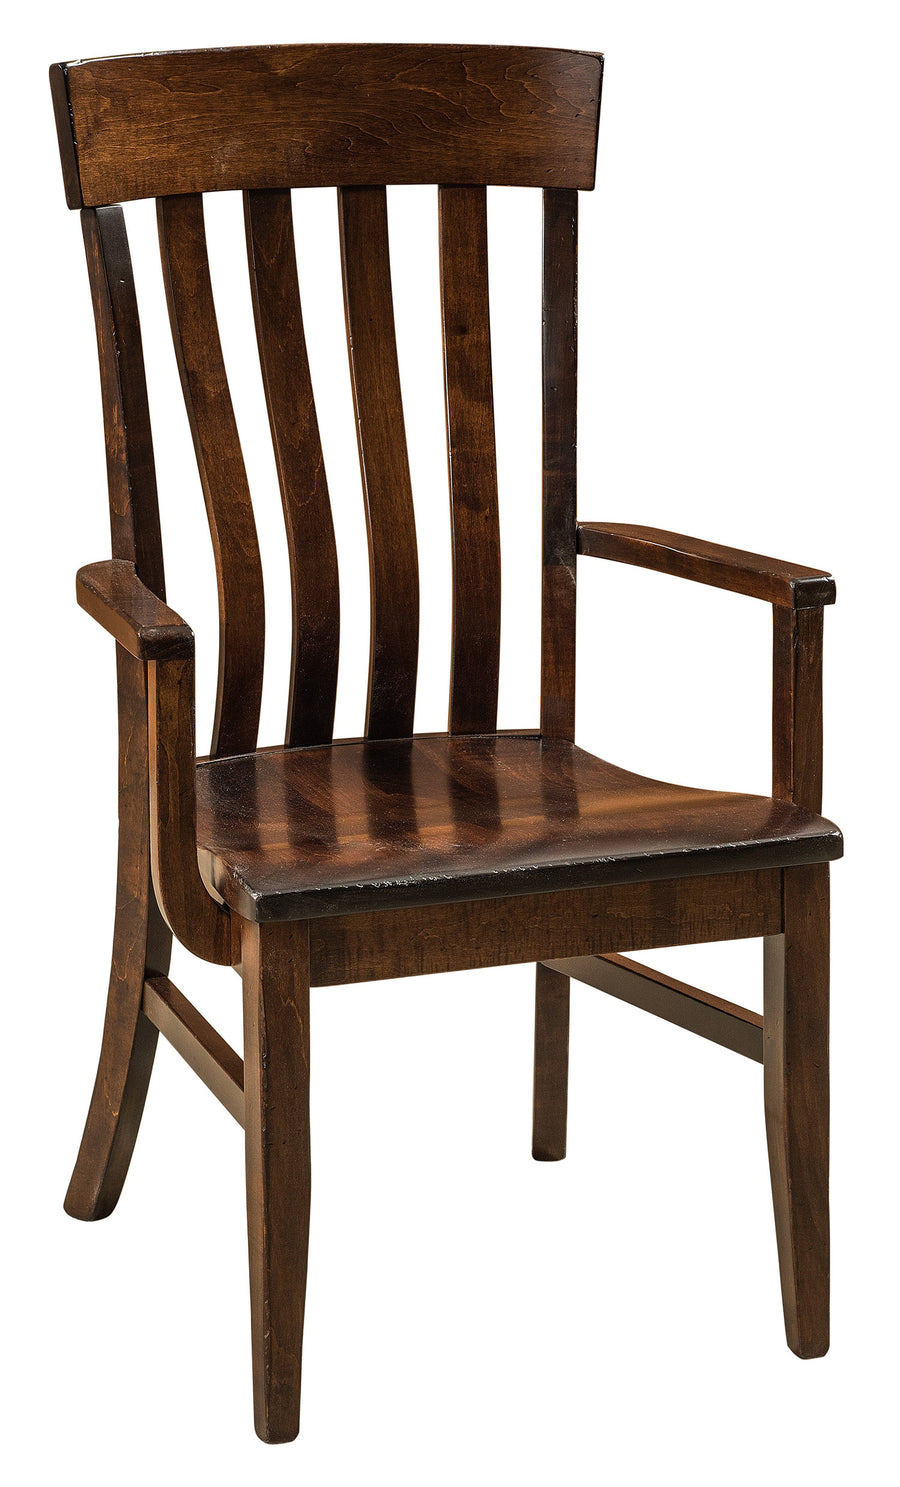 Galena Amish Arm Chair - Charleston Amish Furniture